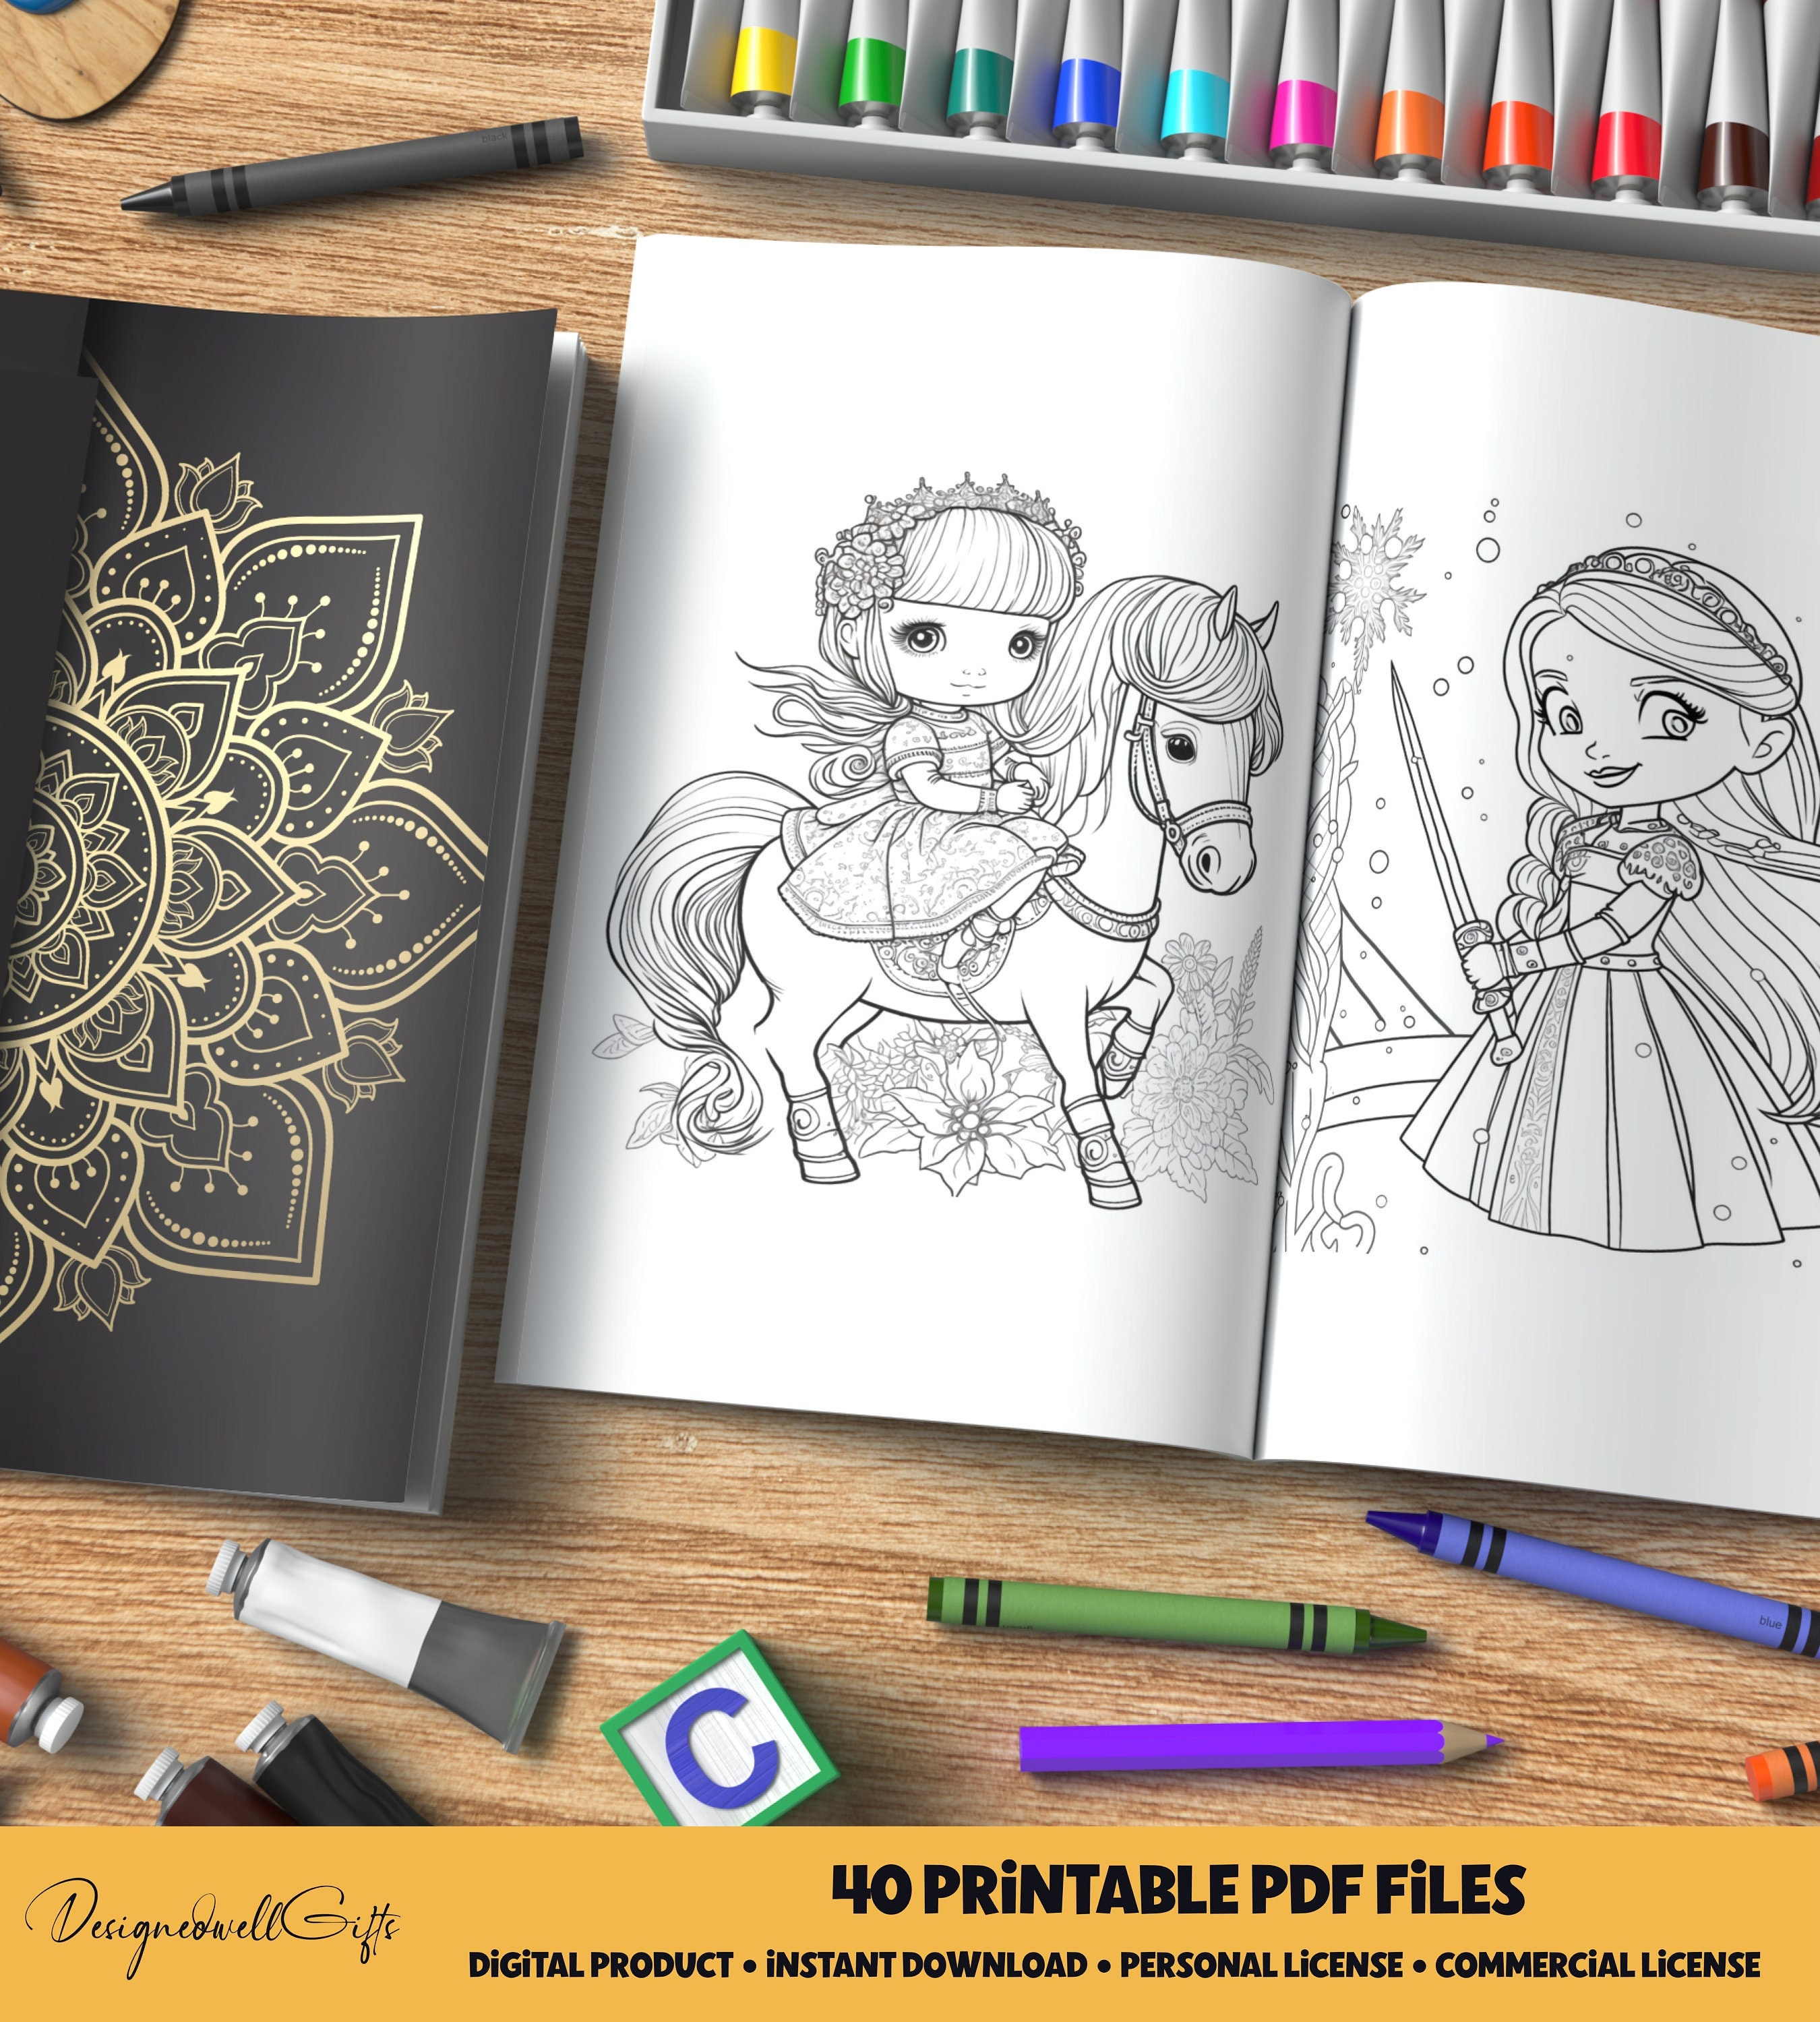 Disney Princess Coloring Pages – Free Printable Download, best stuff